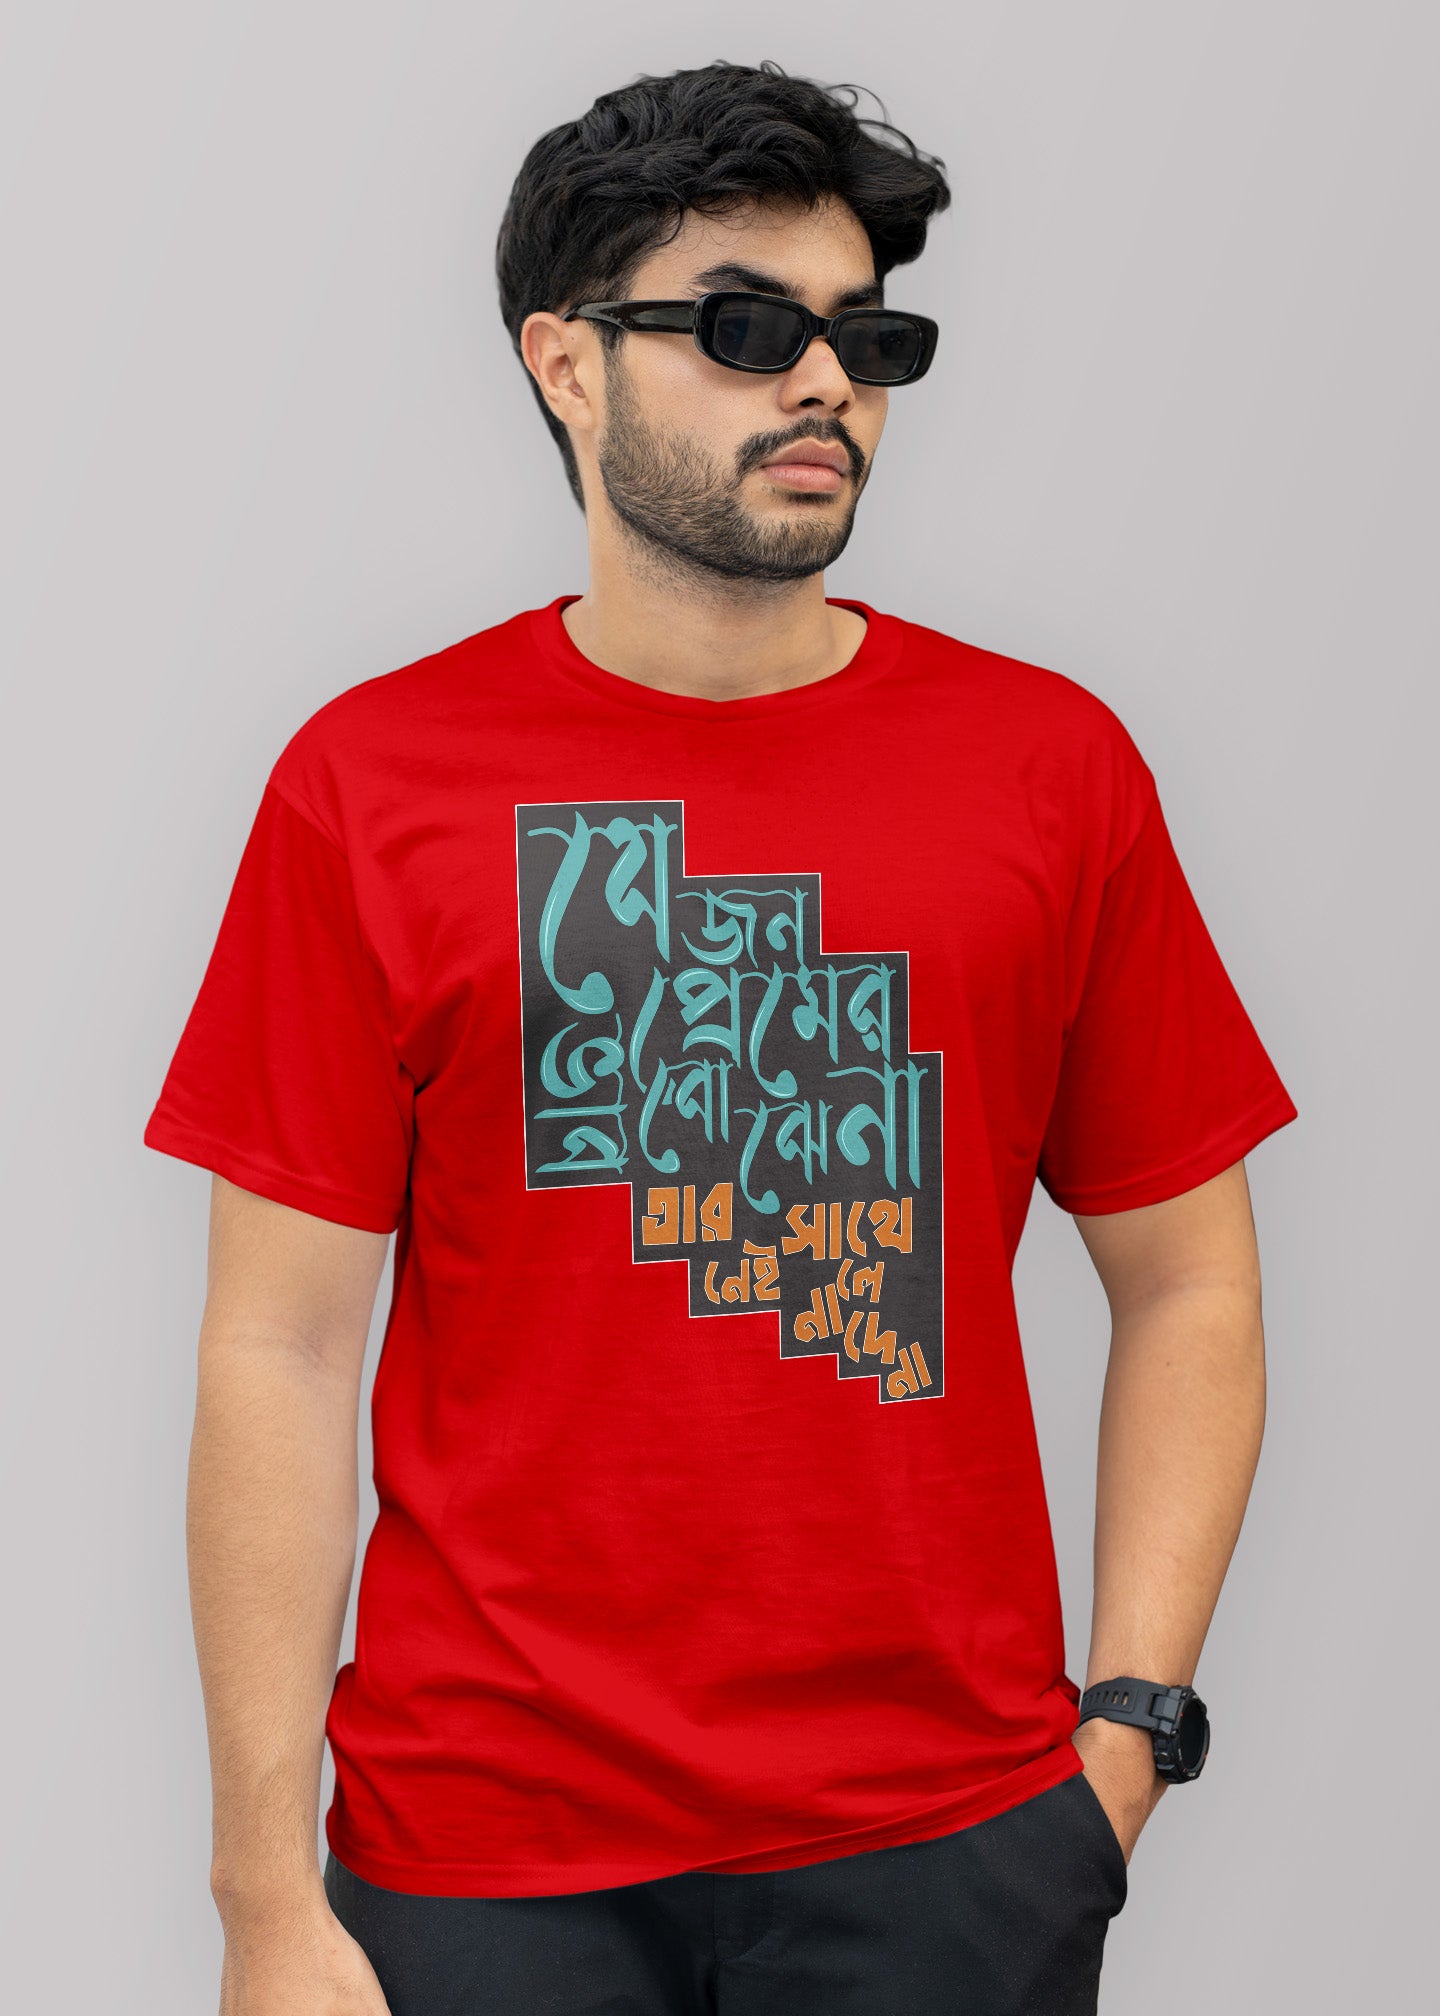 Je jon premer bhav bojhe nai bengali Printed Half Sleeve Premium Cotton T-shirt For Men